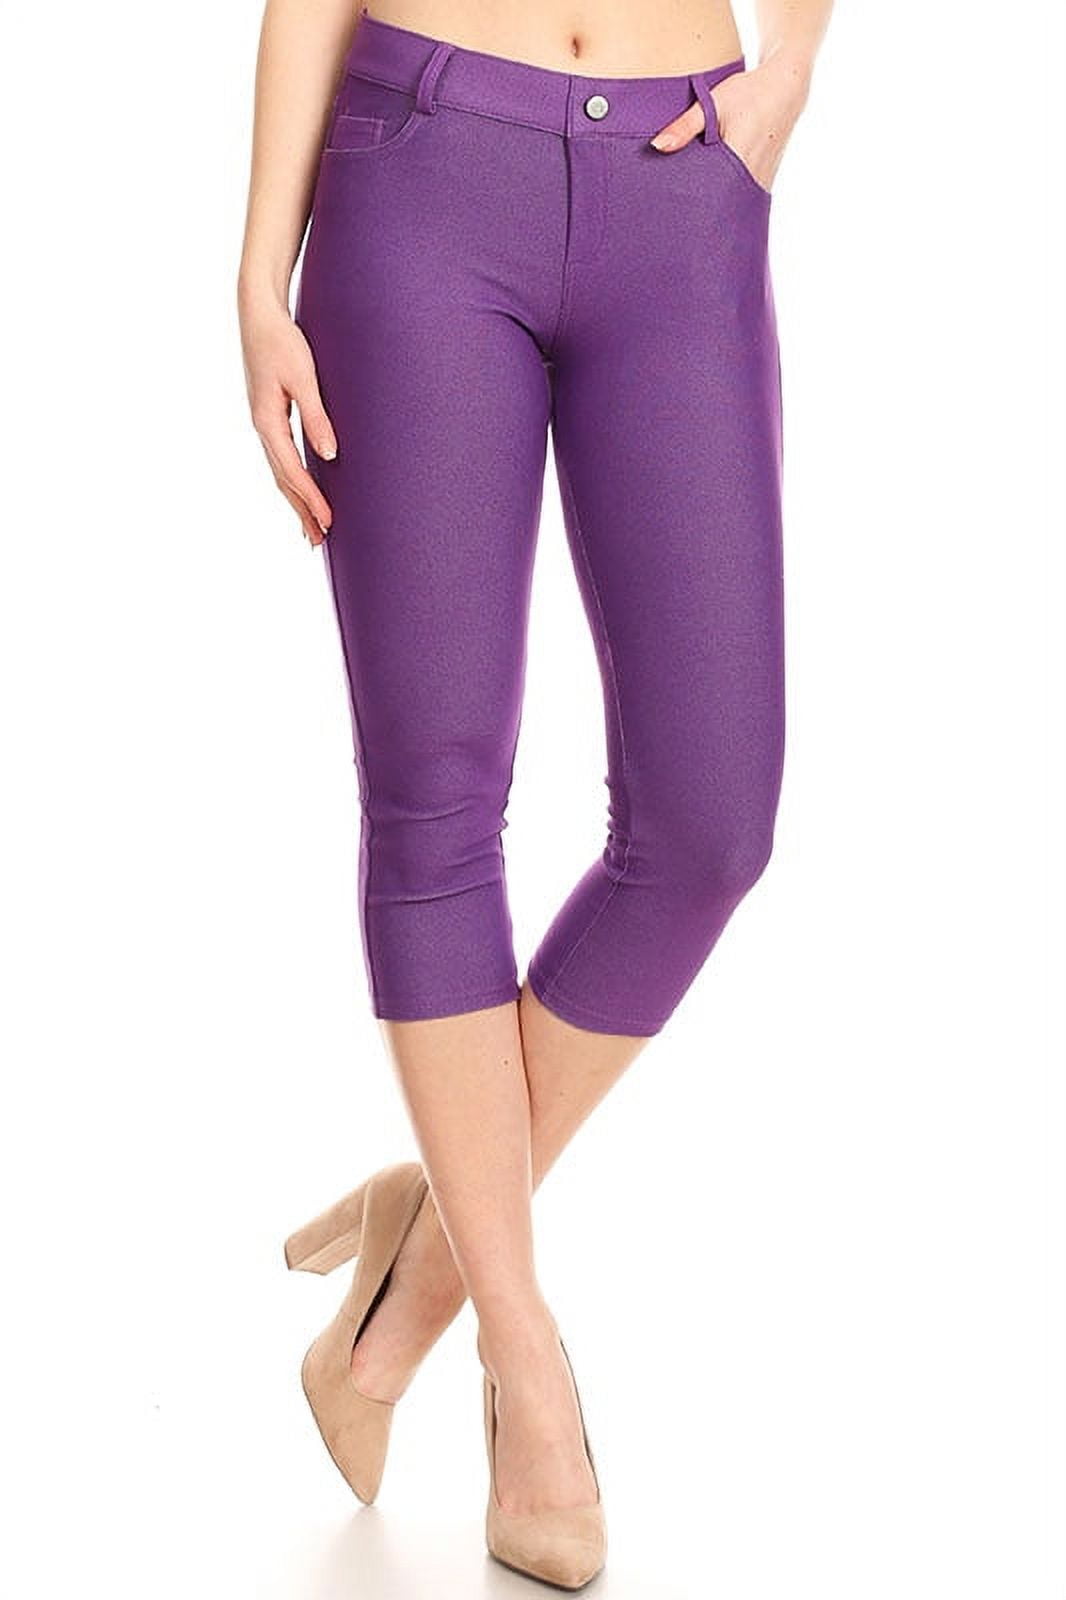 Women's Cotton Blend Capri Jeggings Stretchy Skinny Pants Jeans